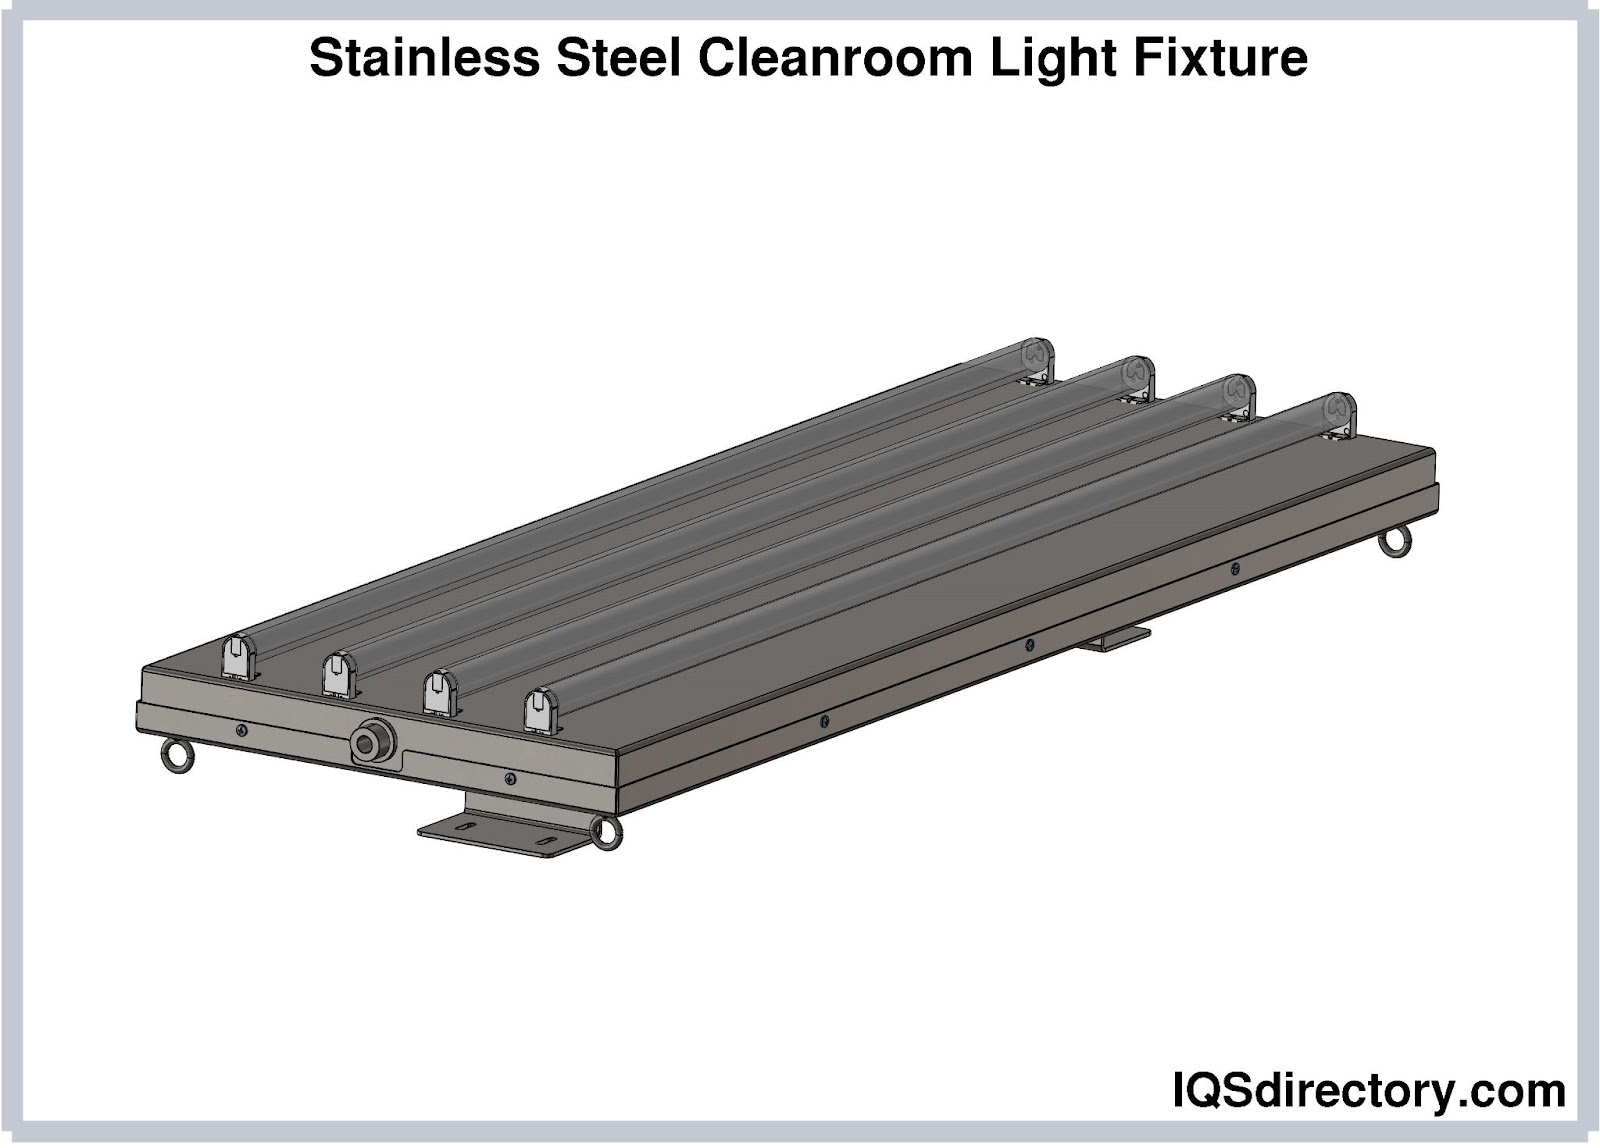 Stainless Steel cleanroom Light Fixture